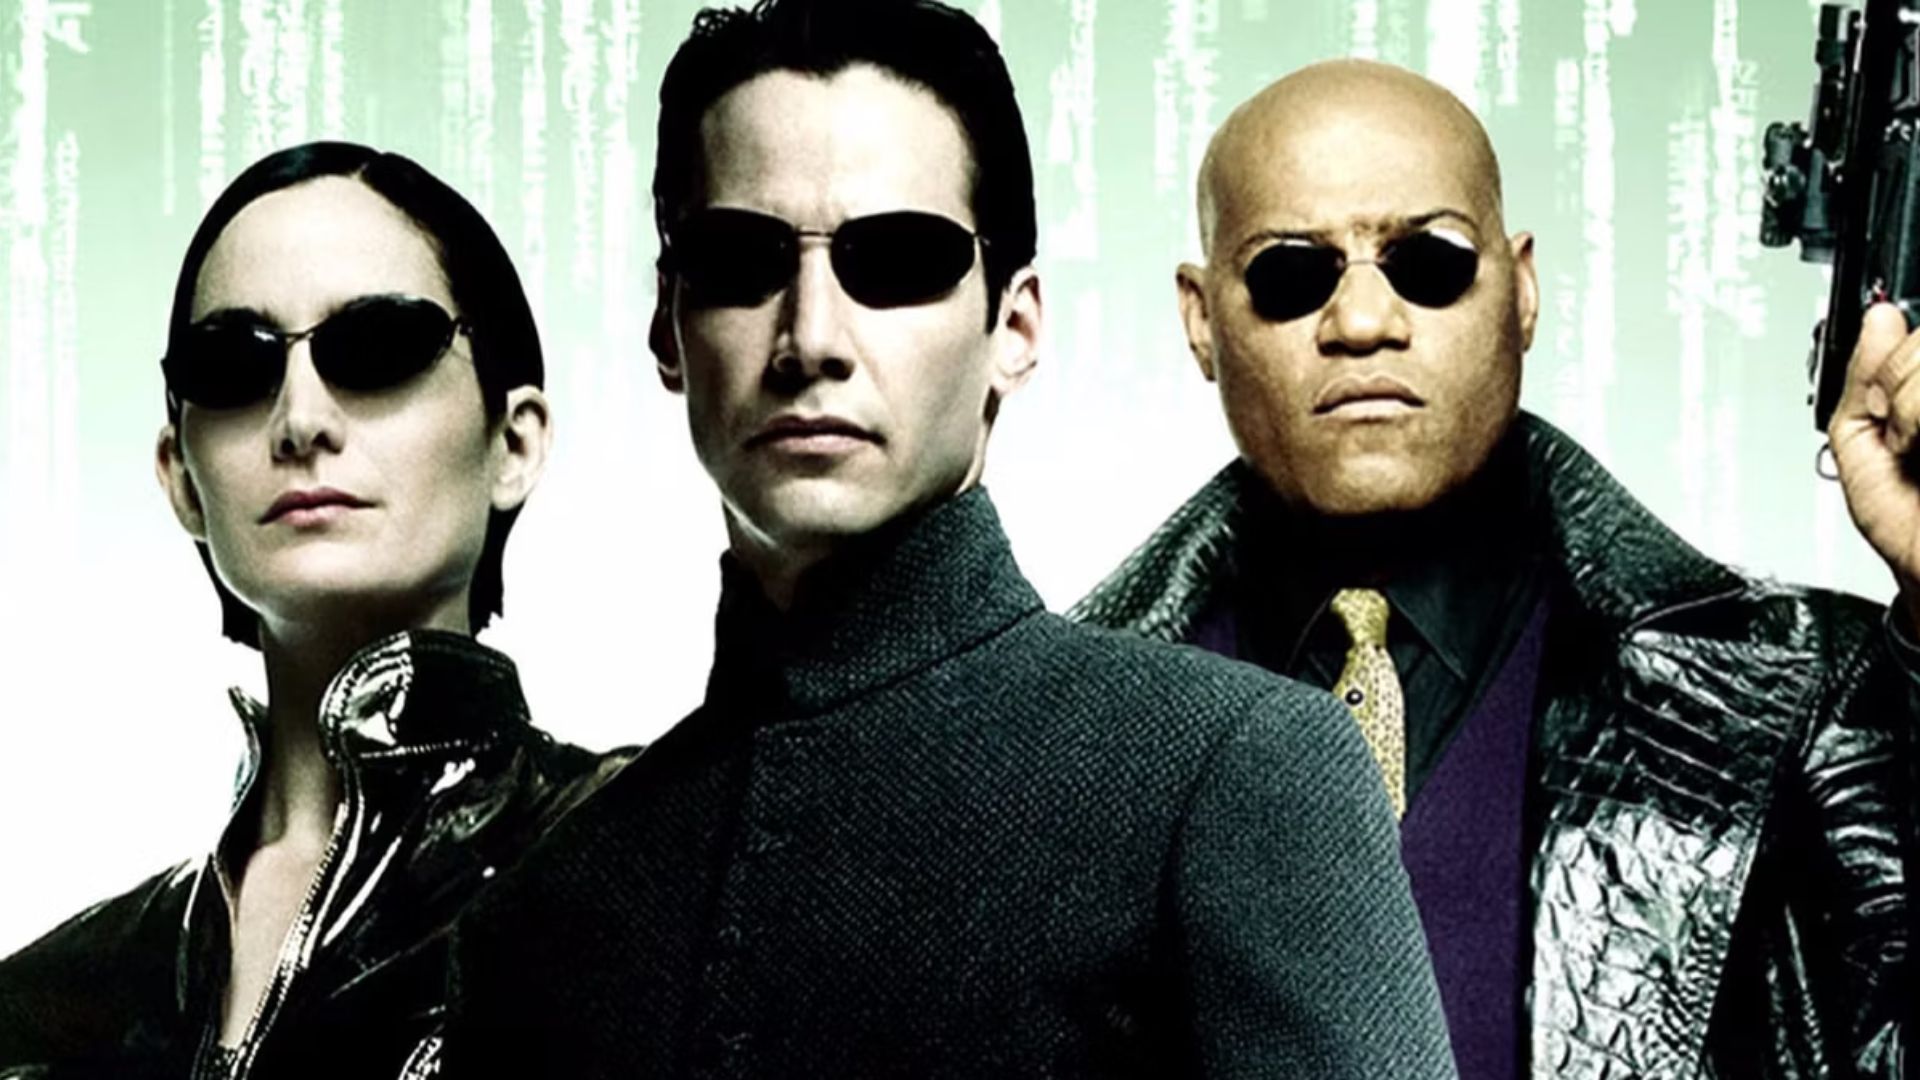 Is The Matrix On Netflix?